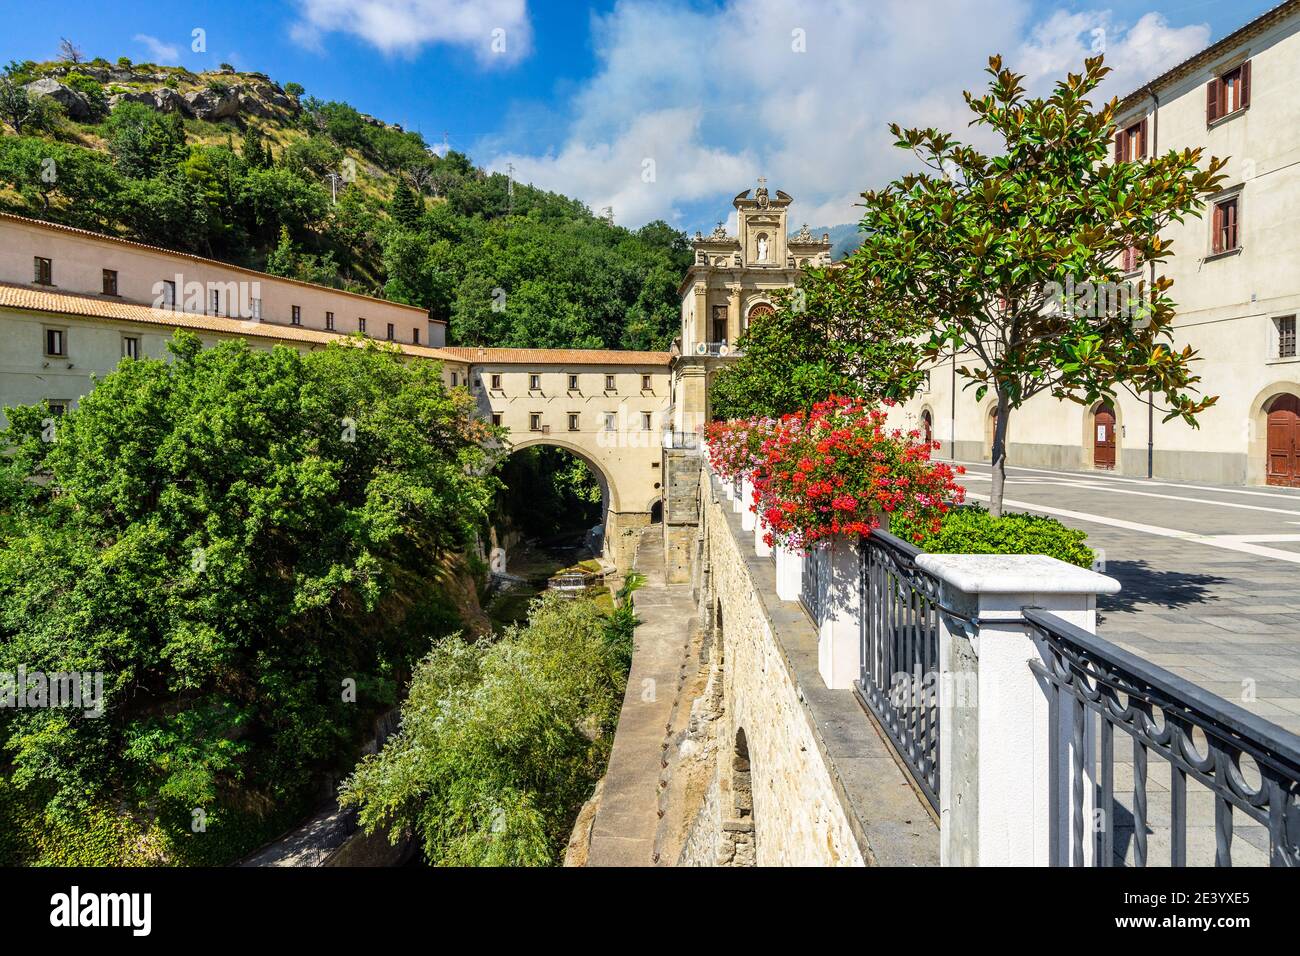 The catholic sanctuary of San Francesco di Paola, famous pilgrimage destination in Calabria region, Italy Stock Photo